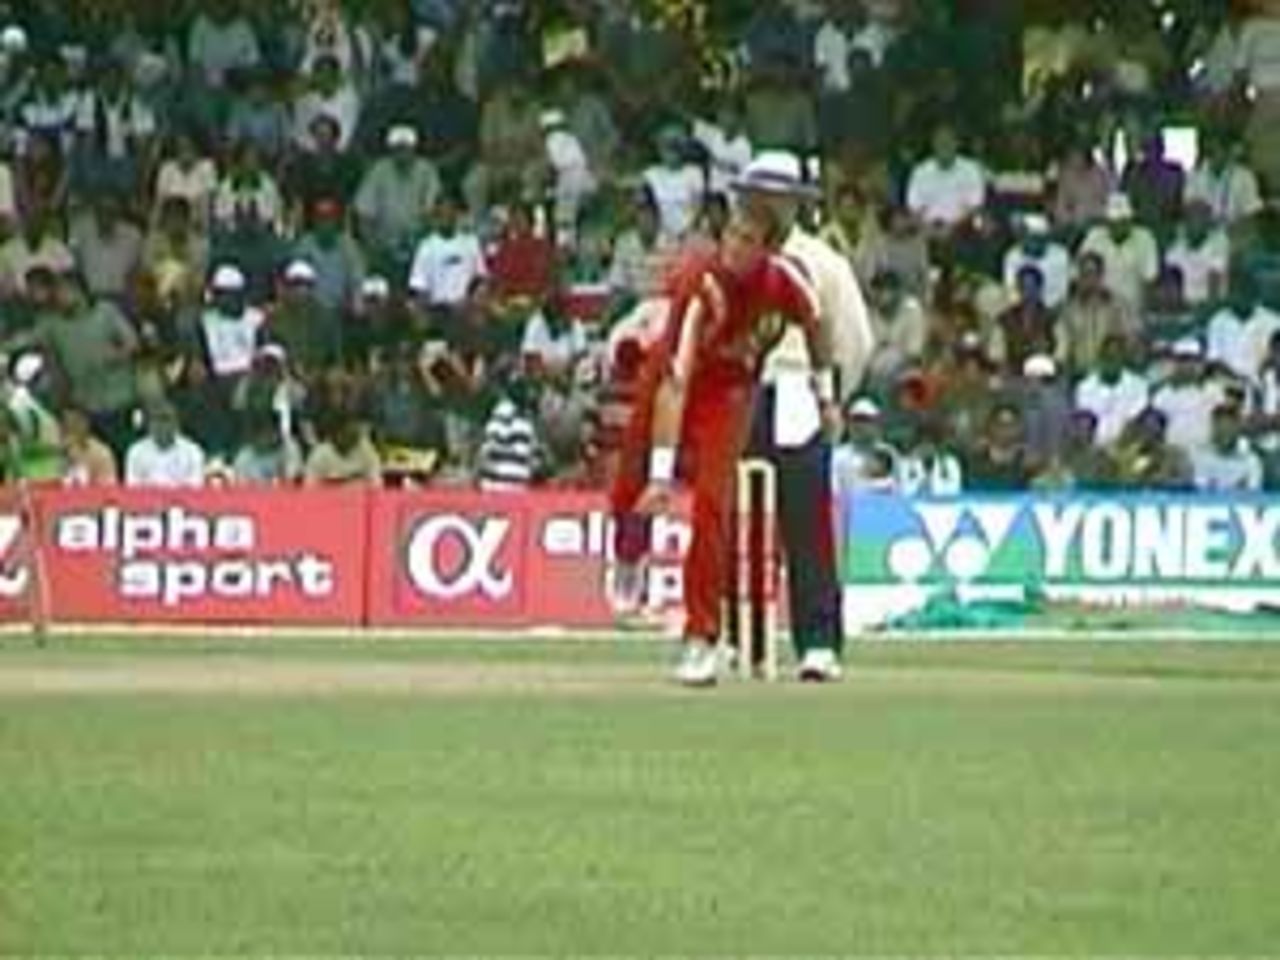 Andy Whittall bowling, India v Zimbabwe (2nd ODI), Coca-Cola Singapore Challenge, 1999-2000, Kallang Ground, Singapore, 4 Sep 1999.